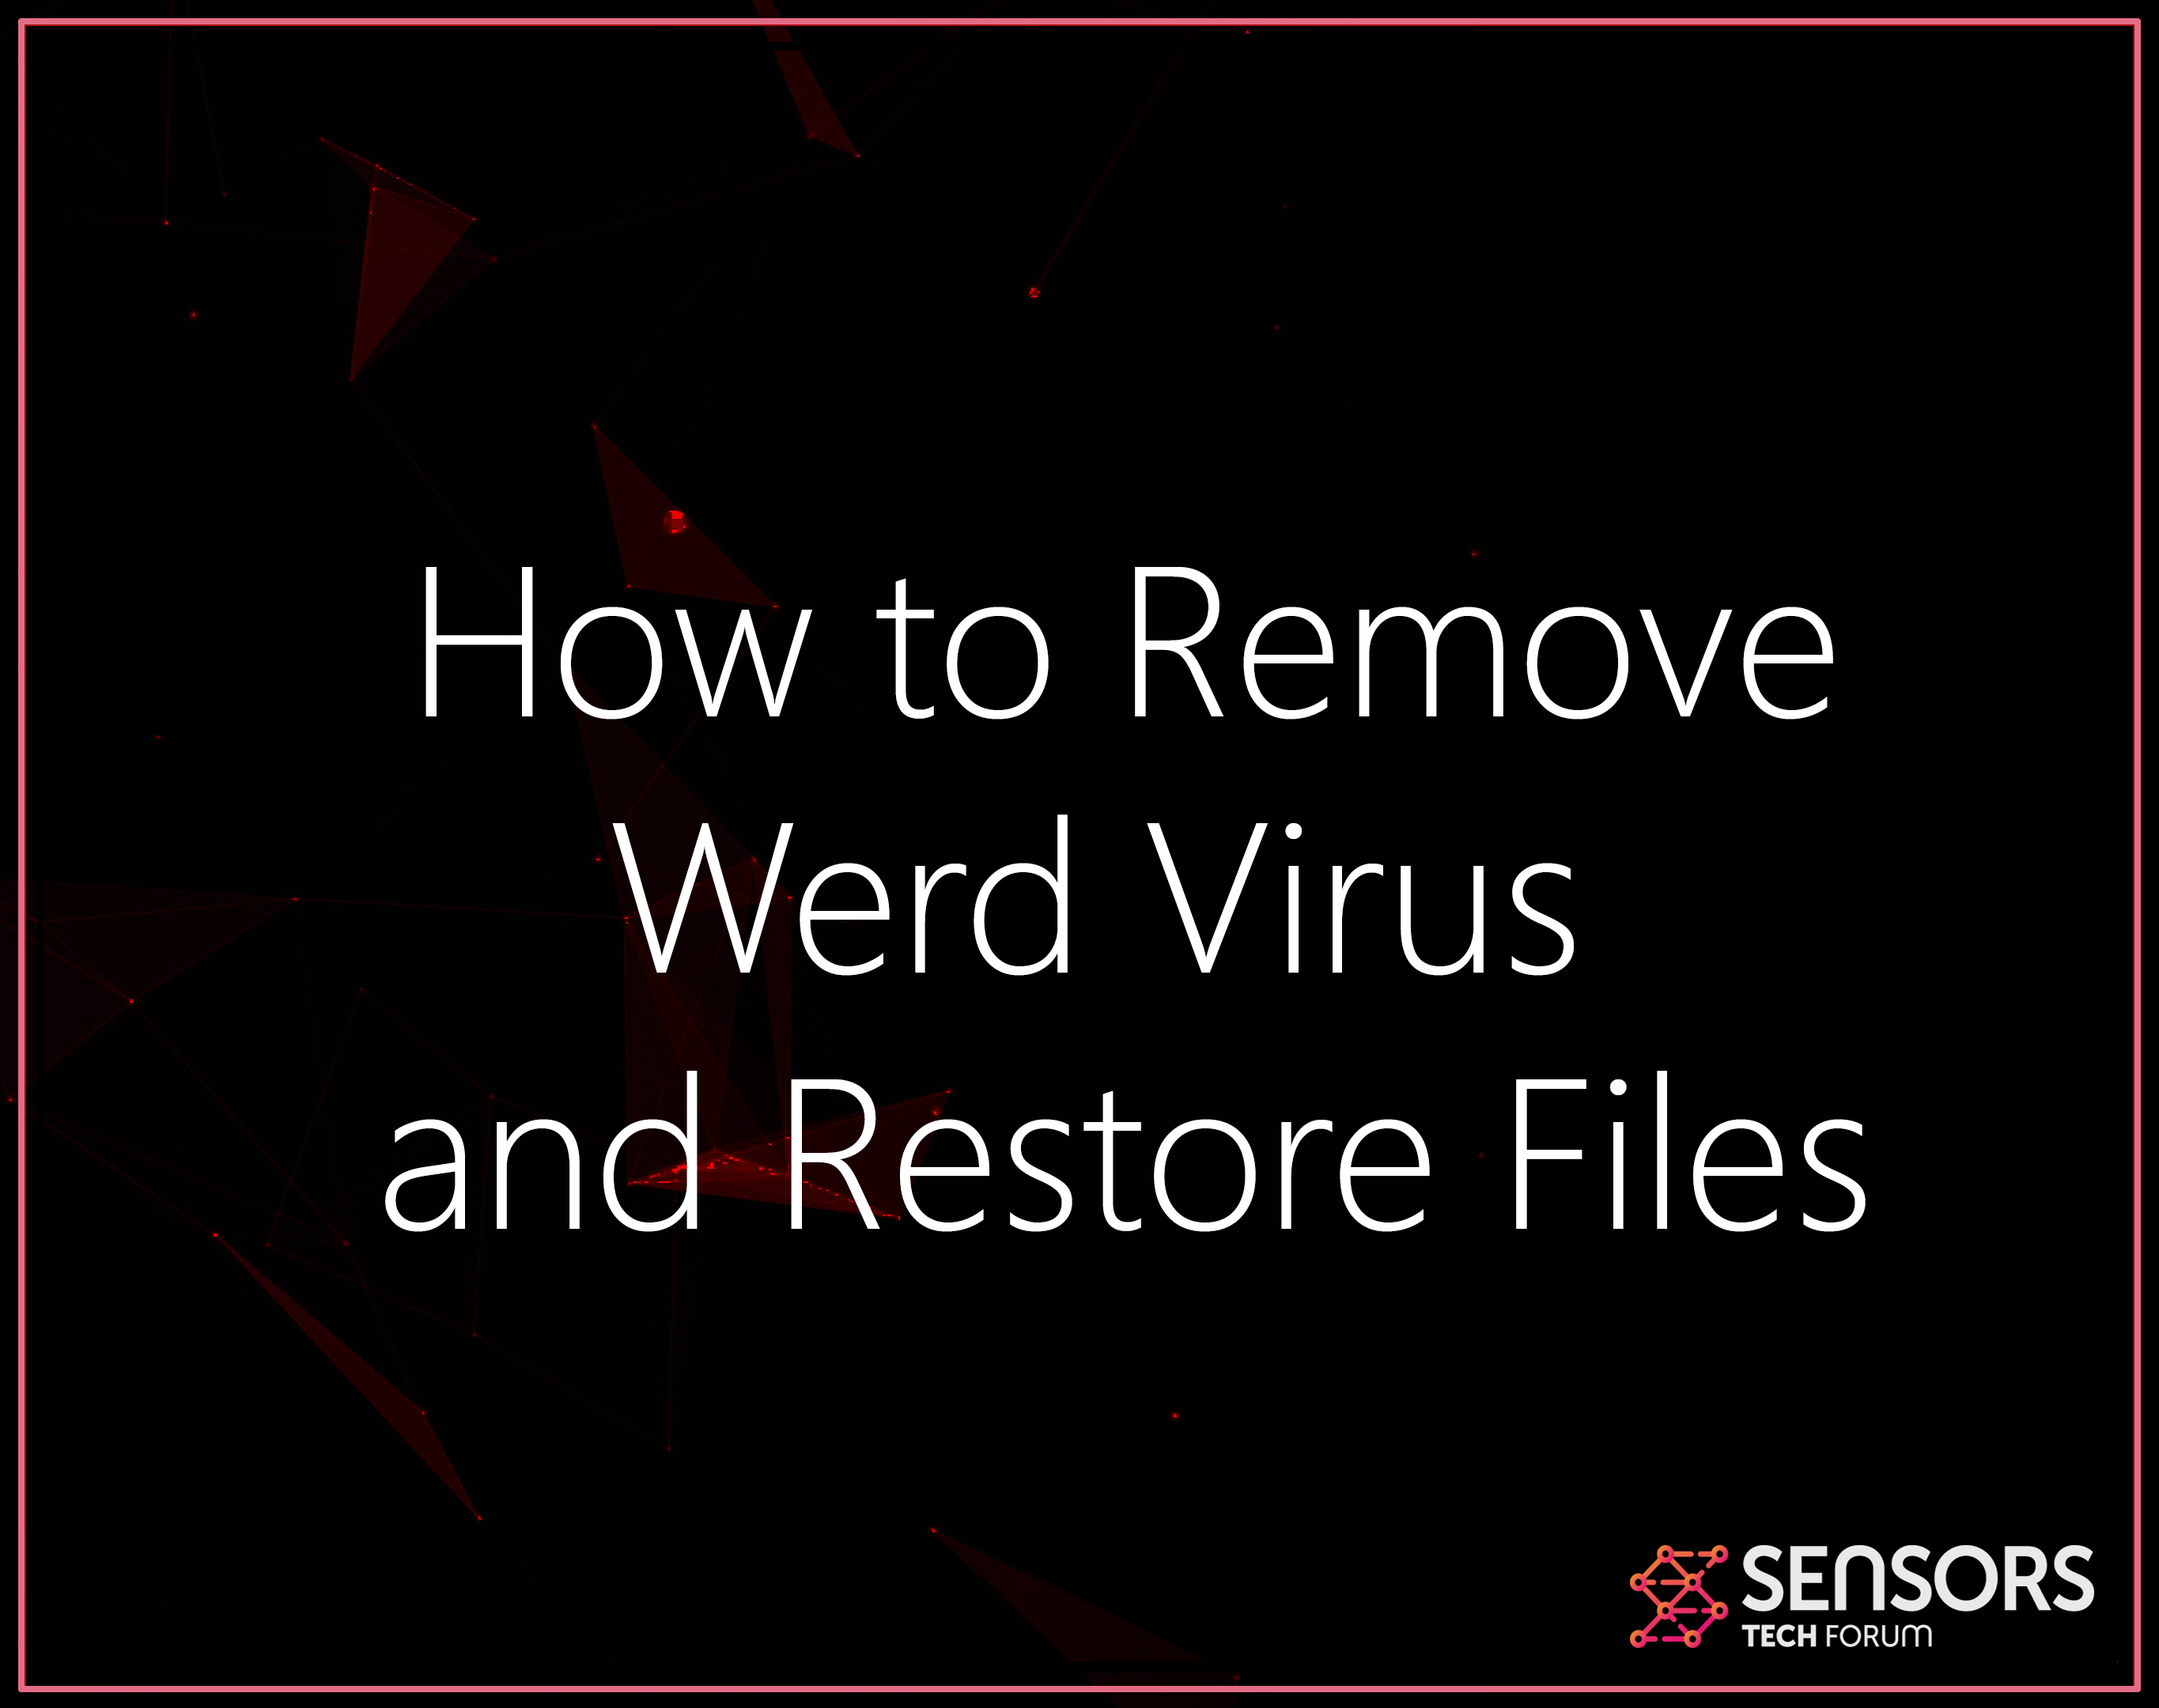 werd-virus-ransomware-files-remove-restore-data